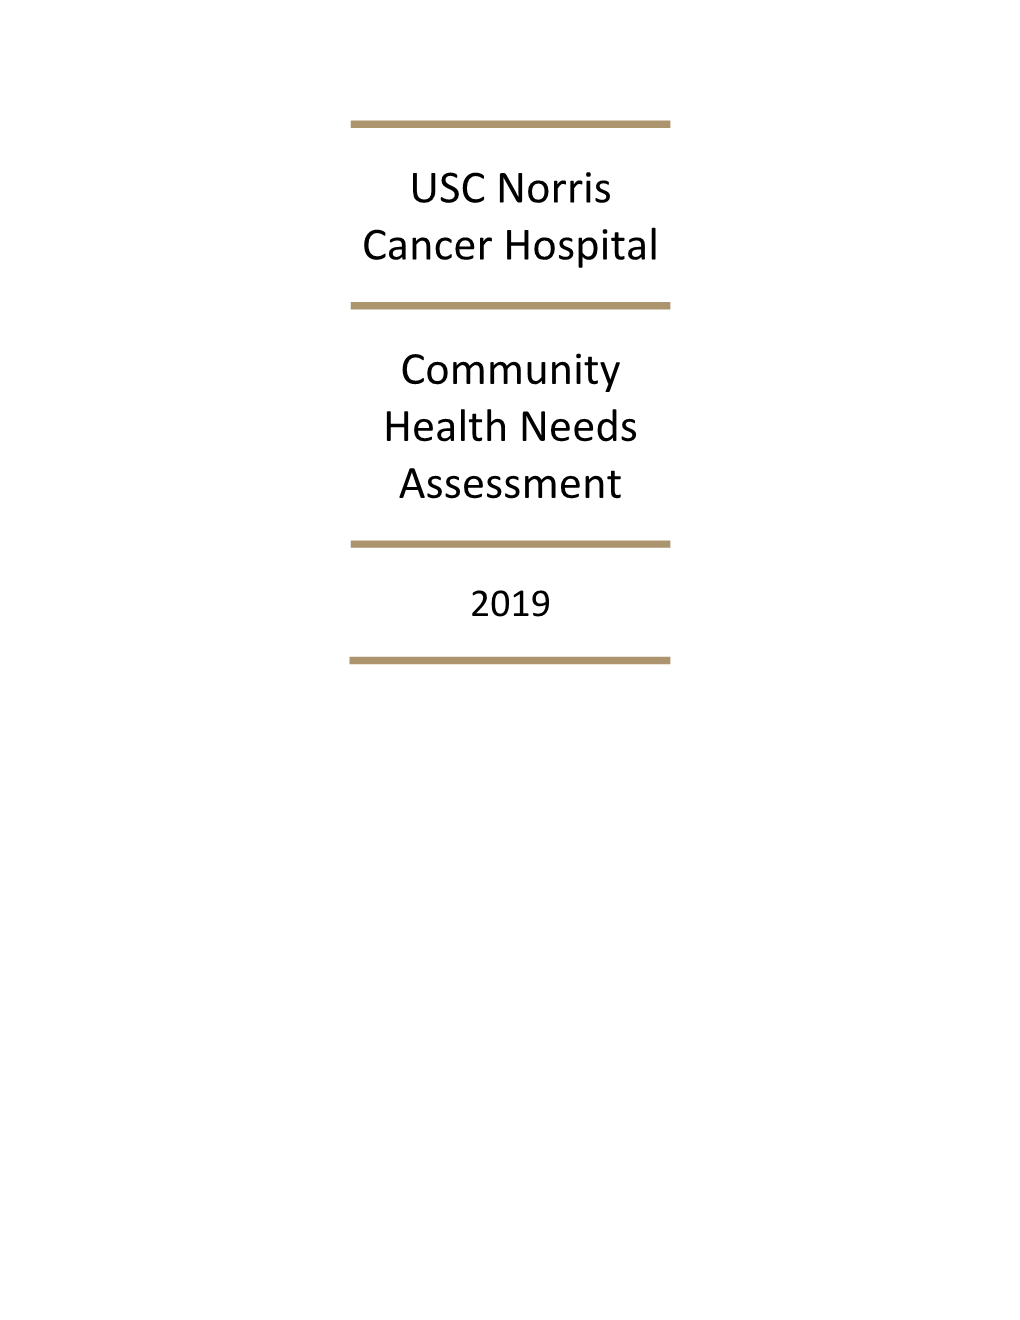 USC Norris Cancer Hospital Community Health Needs